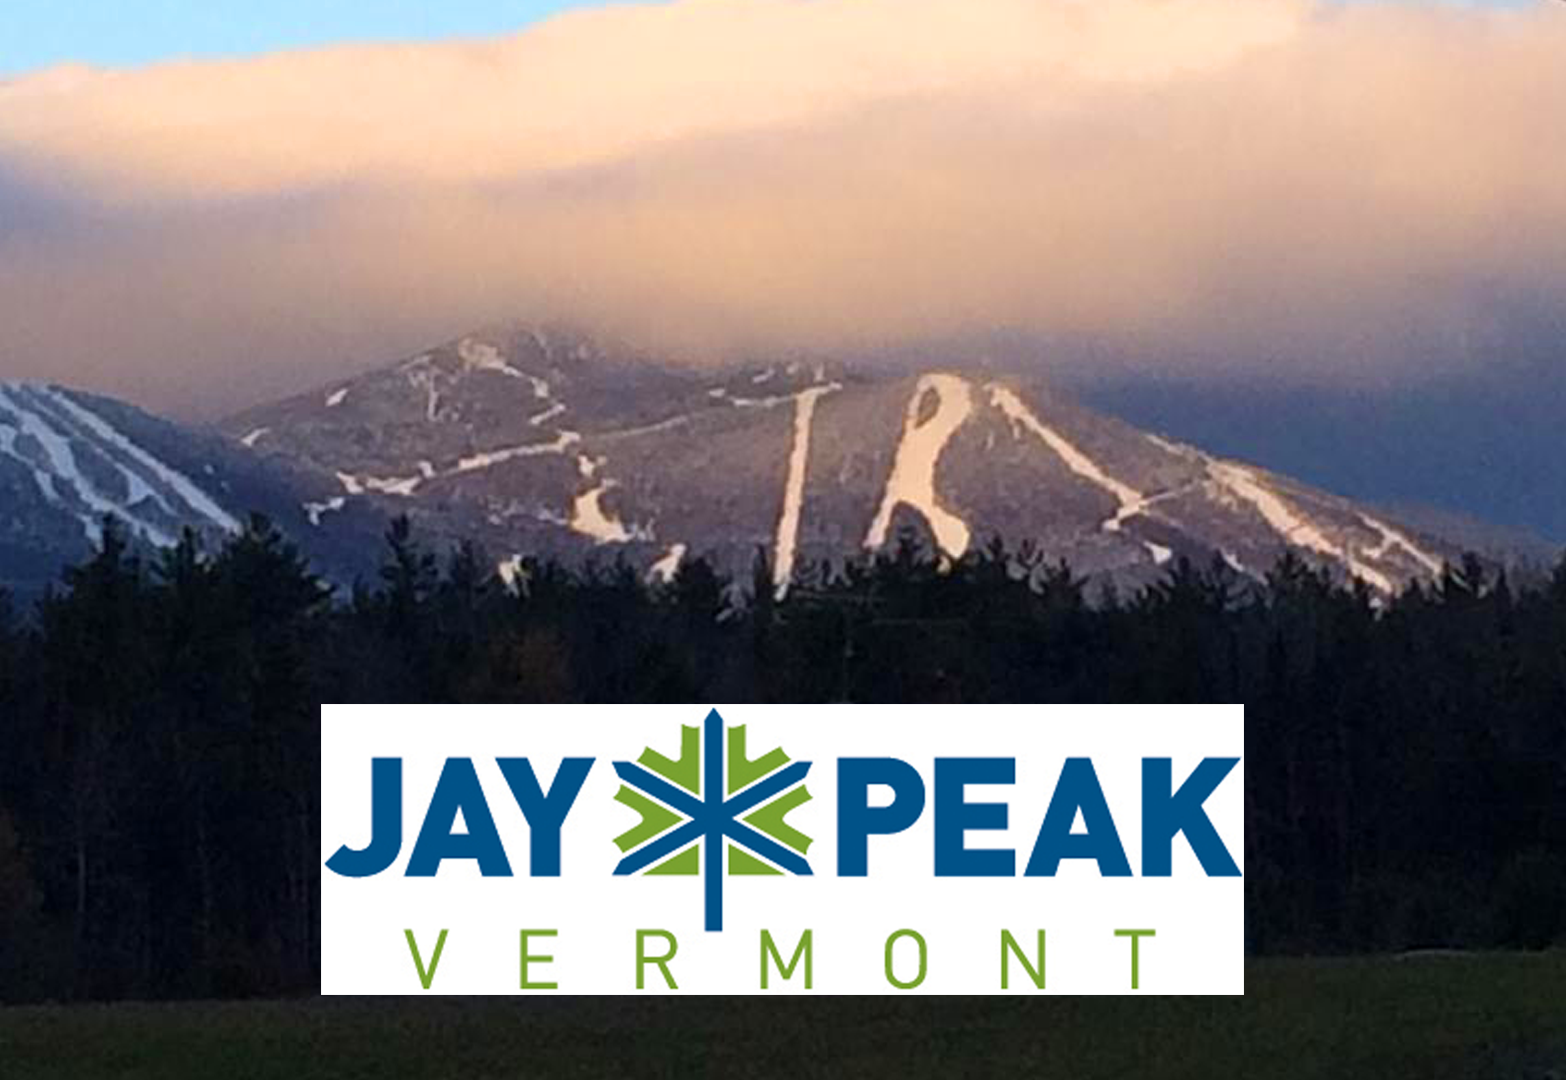 Jay Peak, Vermont Ski Resort